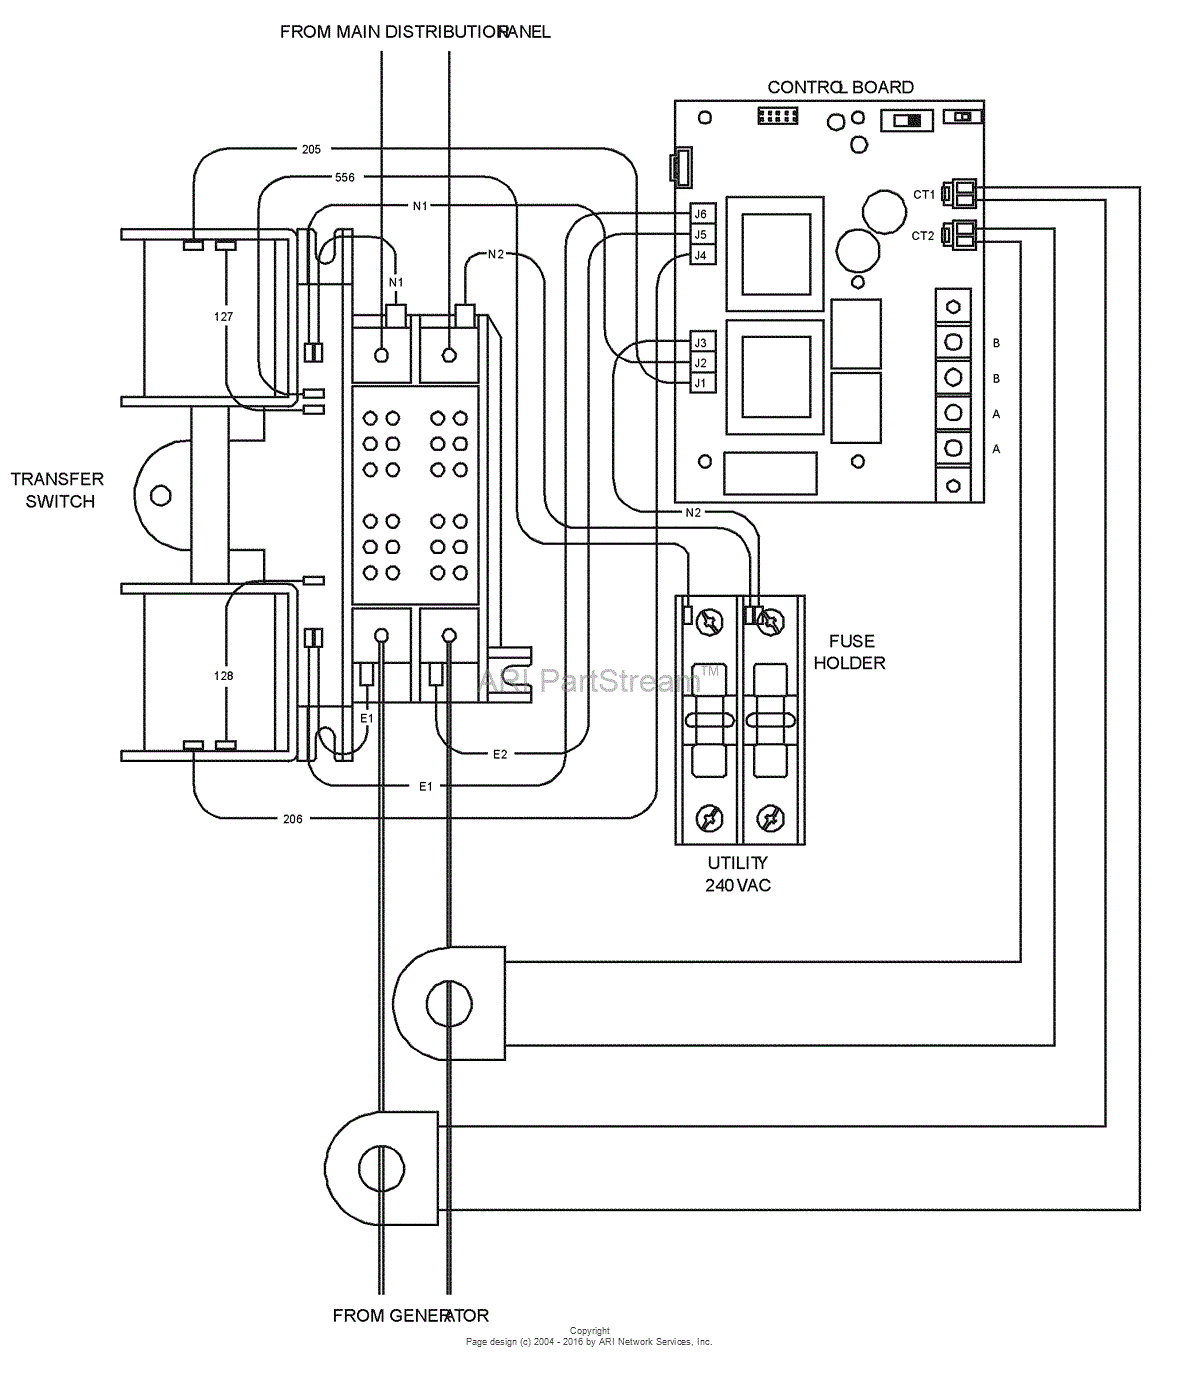 Ridgid 300 Switch Wiring Diagram Collection | Wiring Diagram Sample